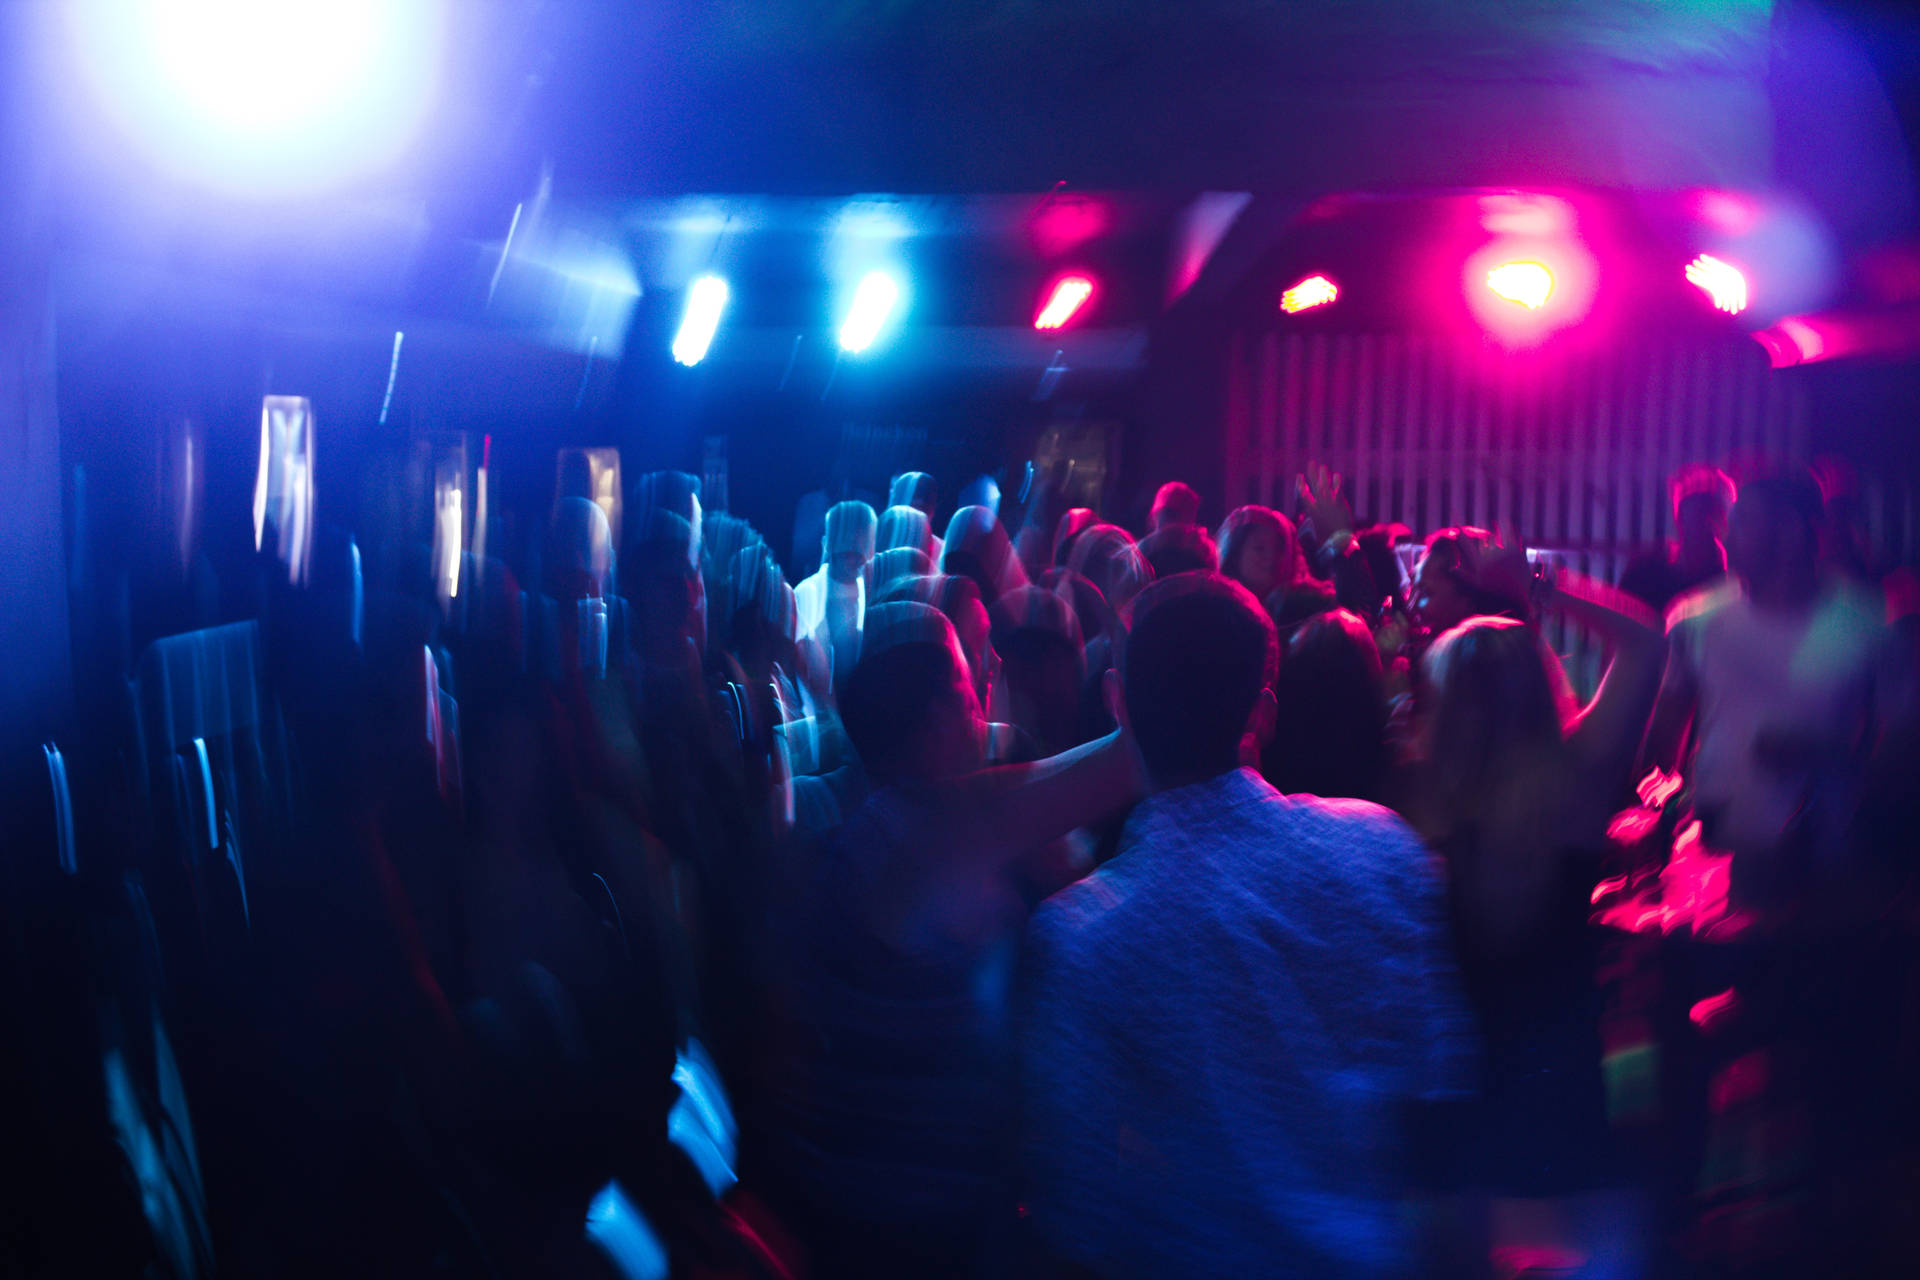 Nightclub Scene At Full Swing Background